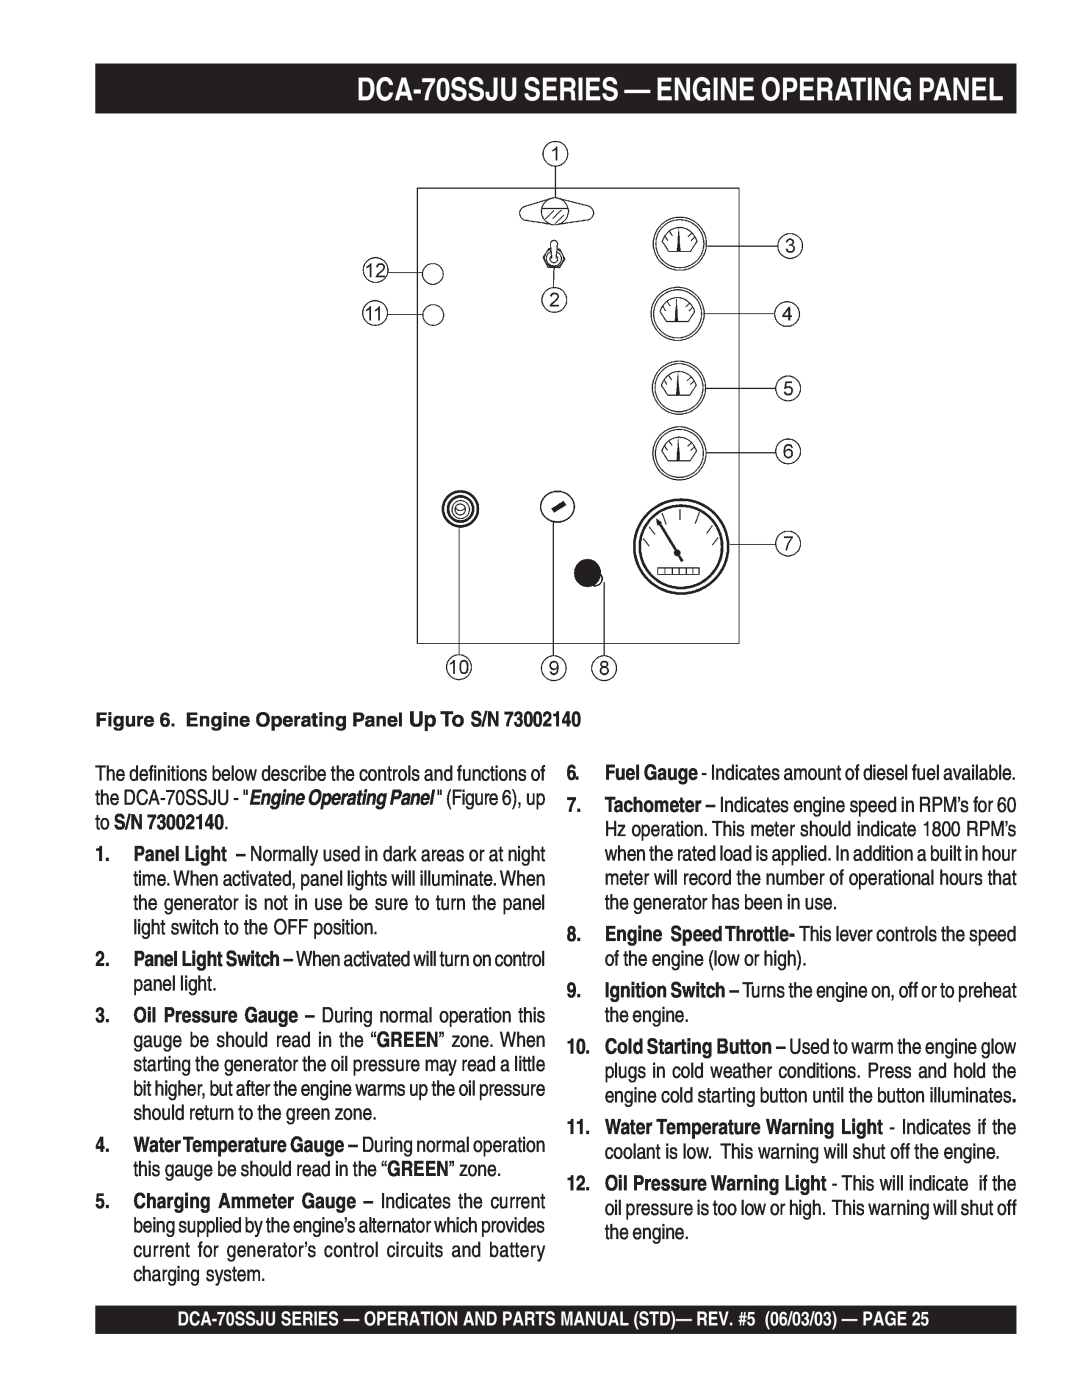 Multiquip operation manual DCA-70SSJUSERIES — ENGINE OPERATING PANEL, Engine Operating Panel Up To S/N 